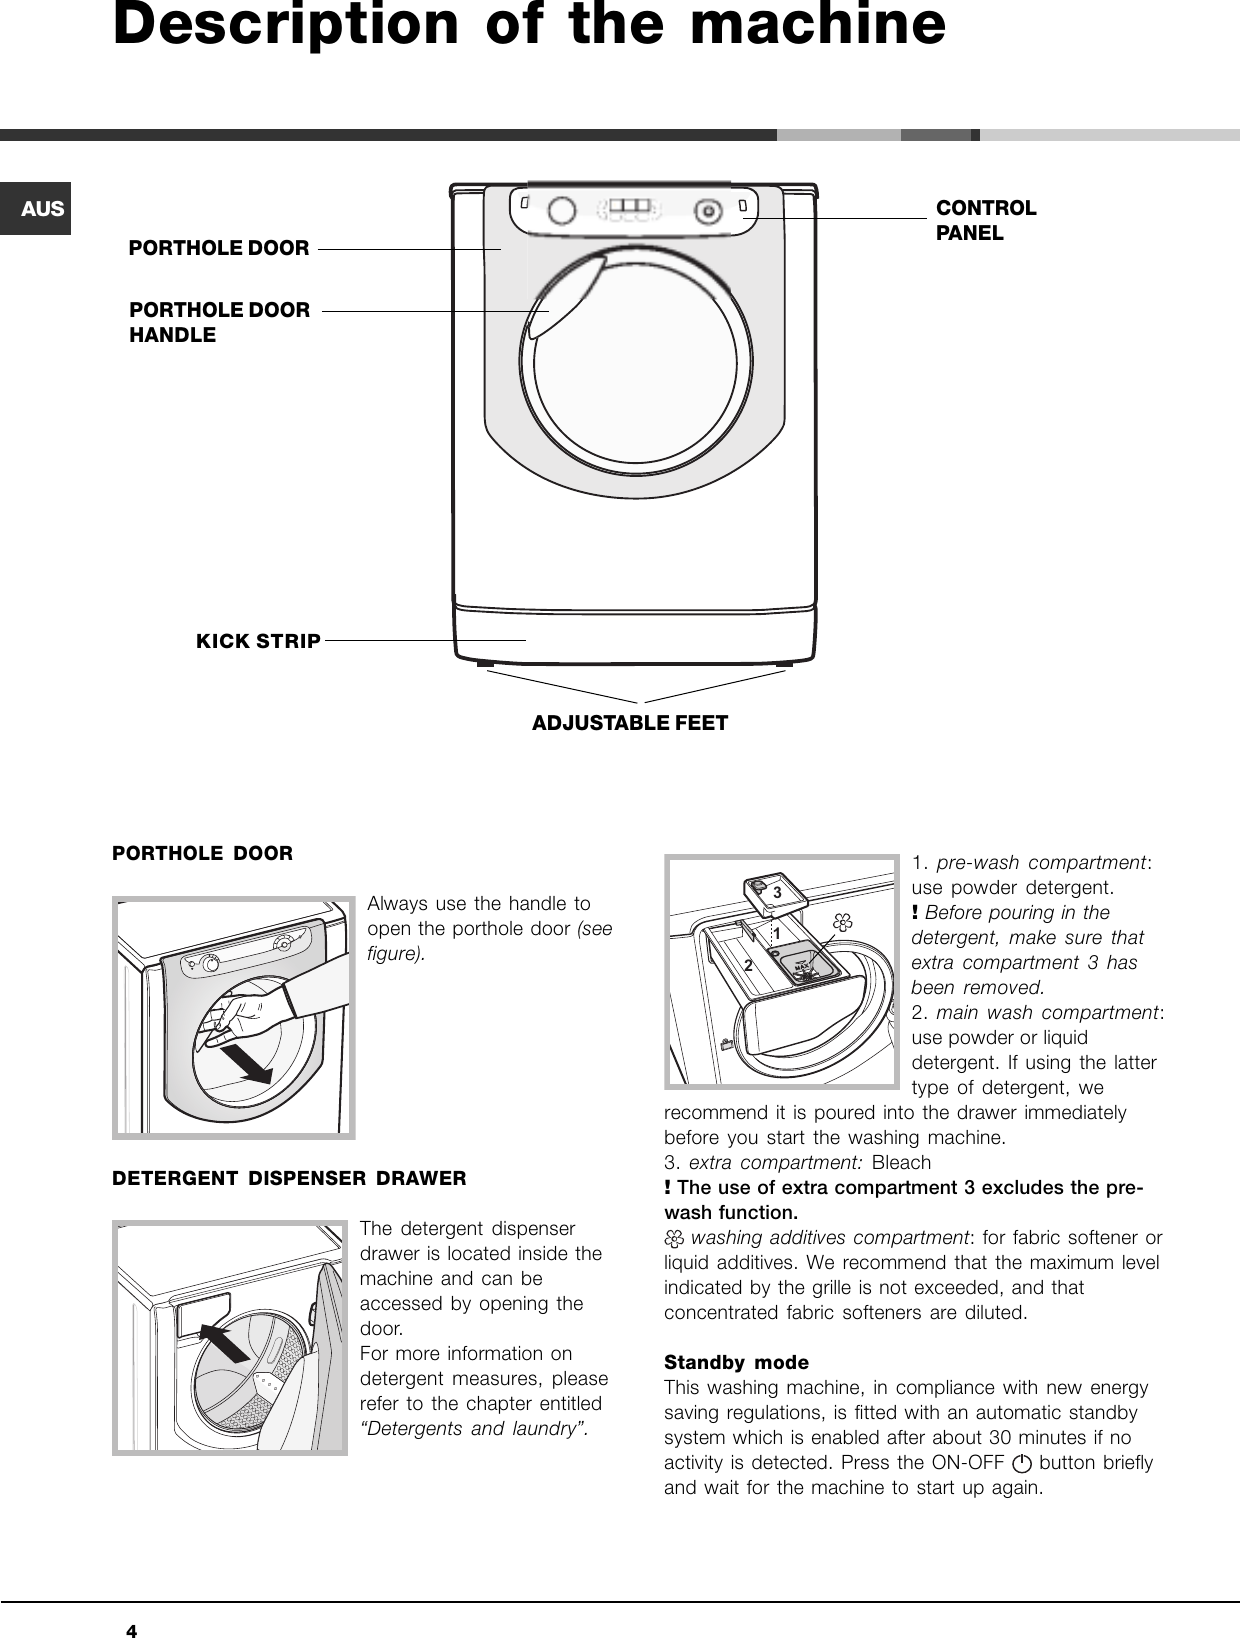 aqualtis滚筒洗衣机图片